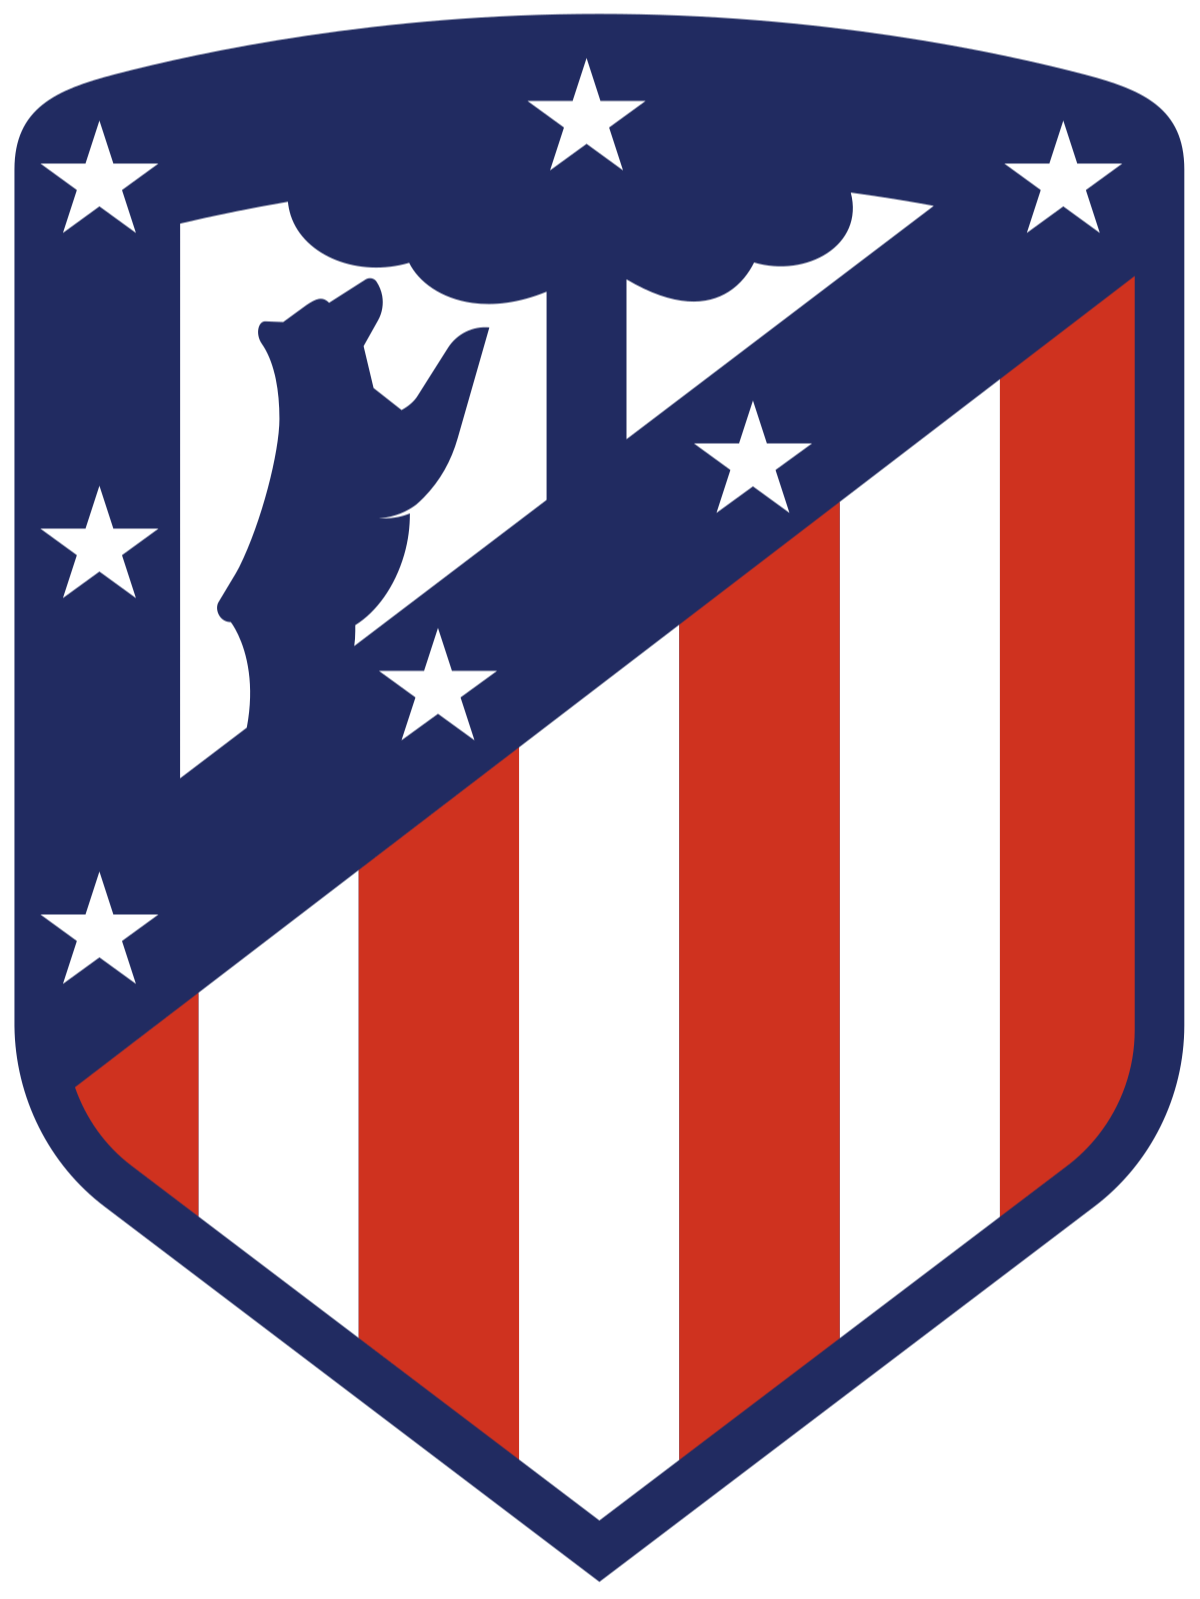 Atletico de Madrid (w) logo